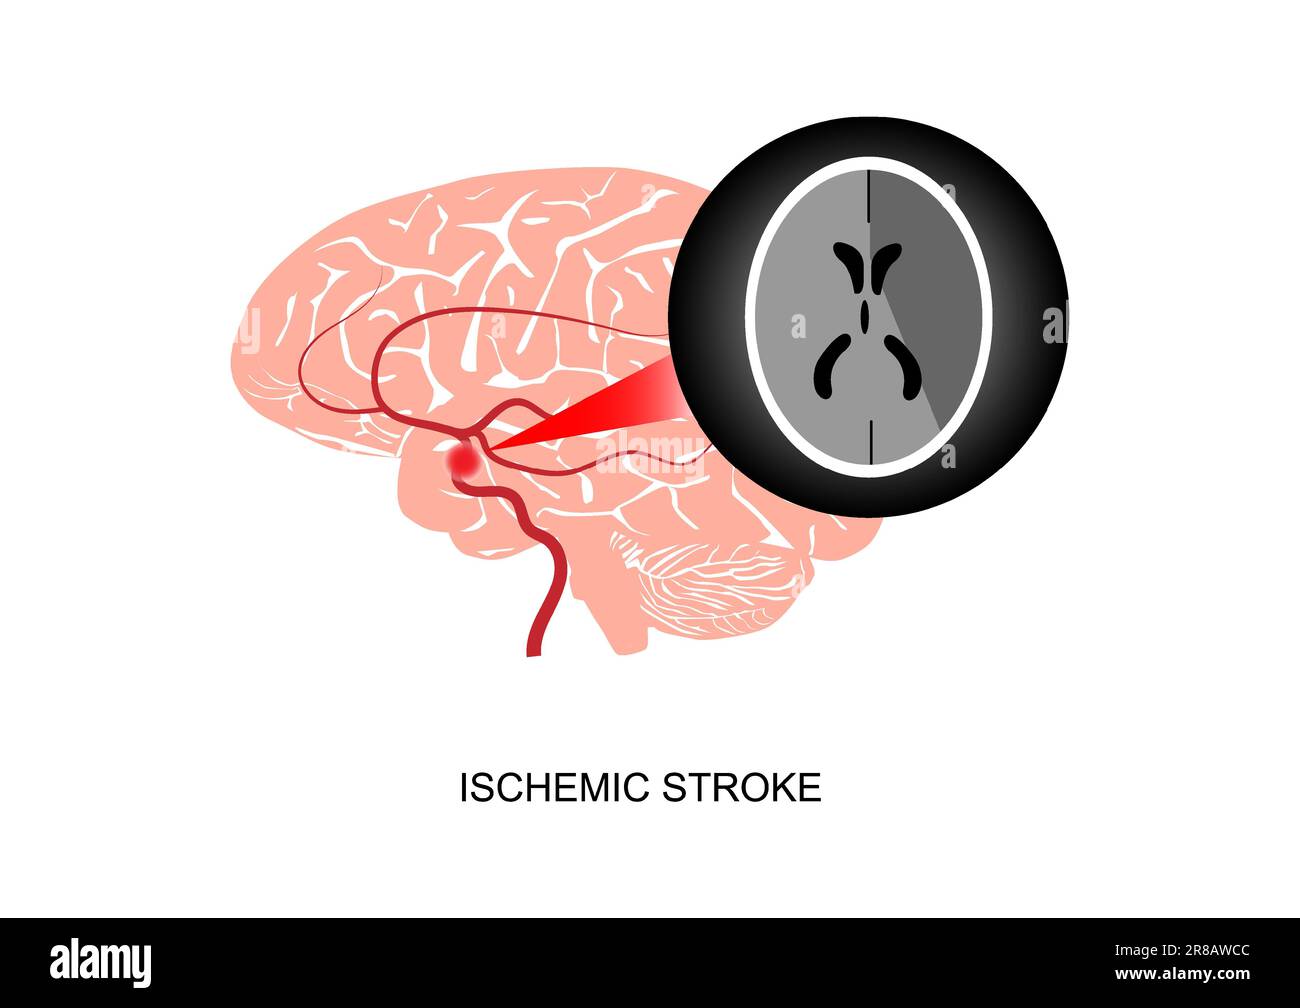 Illustration of cerebral infarction or ischemic stroke and imaging of ...